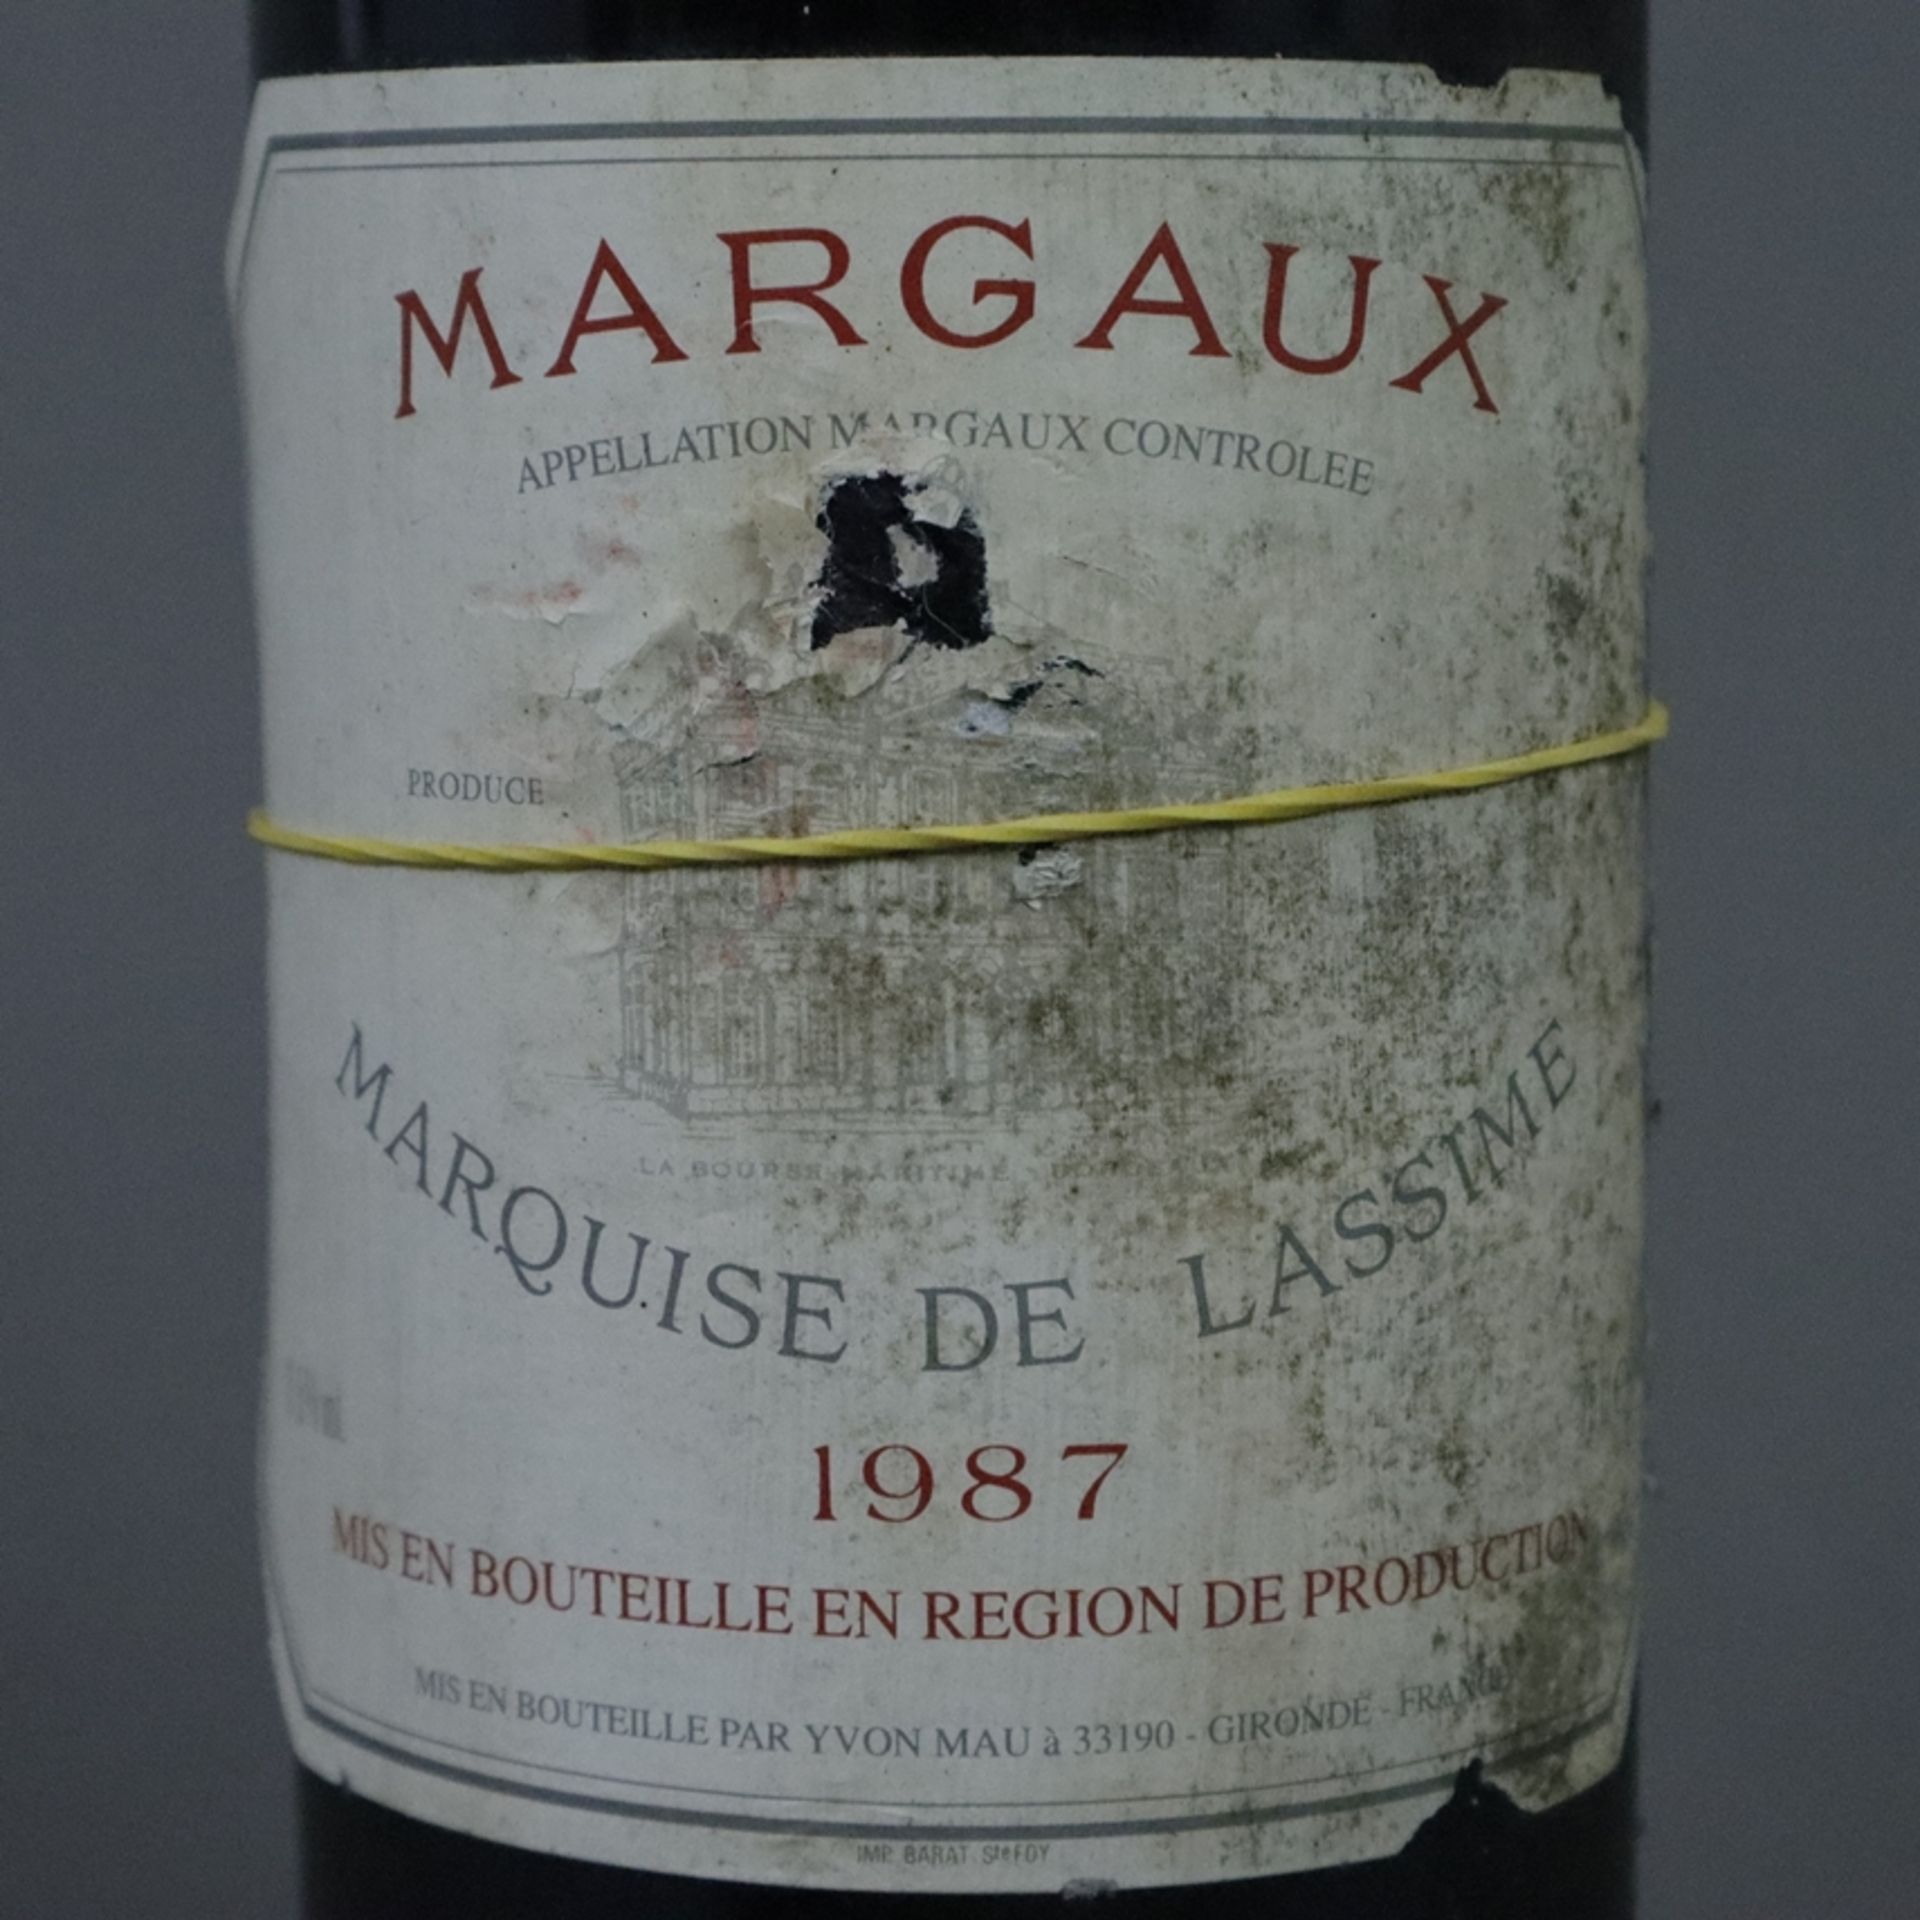 Weinkonvolut - 3 Flaschen 1987 Margaux, Marquise de Lassime, France, 75 cl, Füllstand: Top Shoulder - Bild 4 aus 7